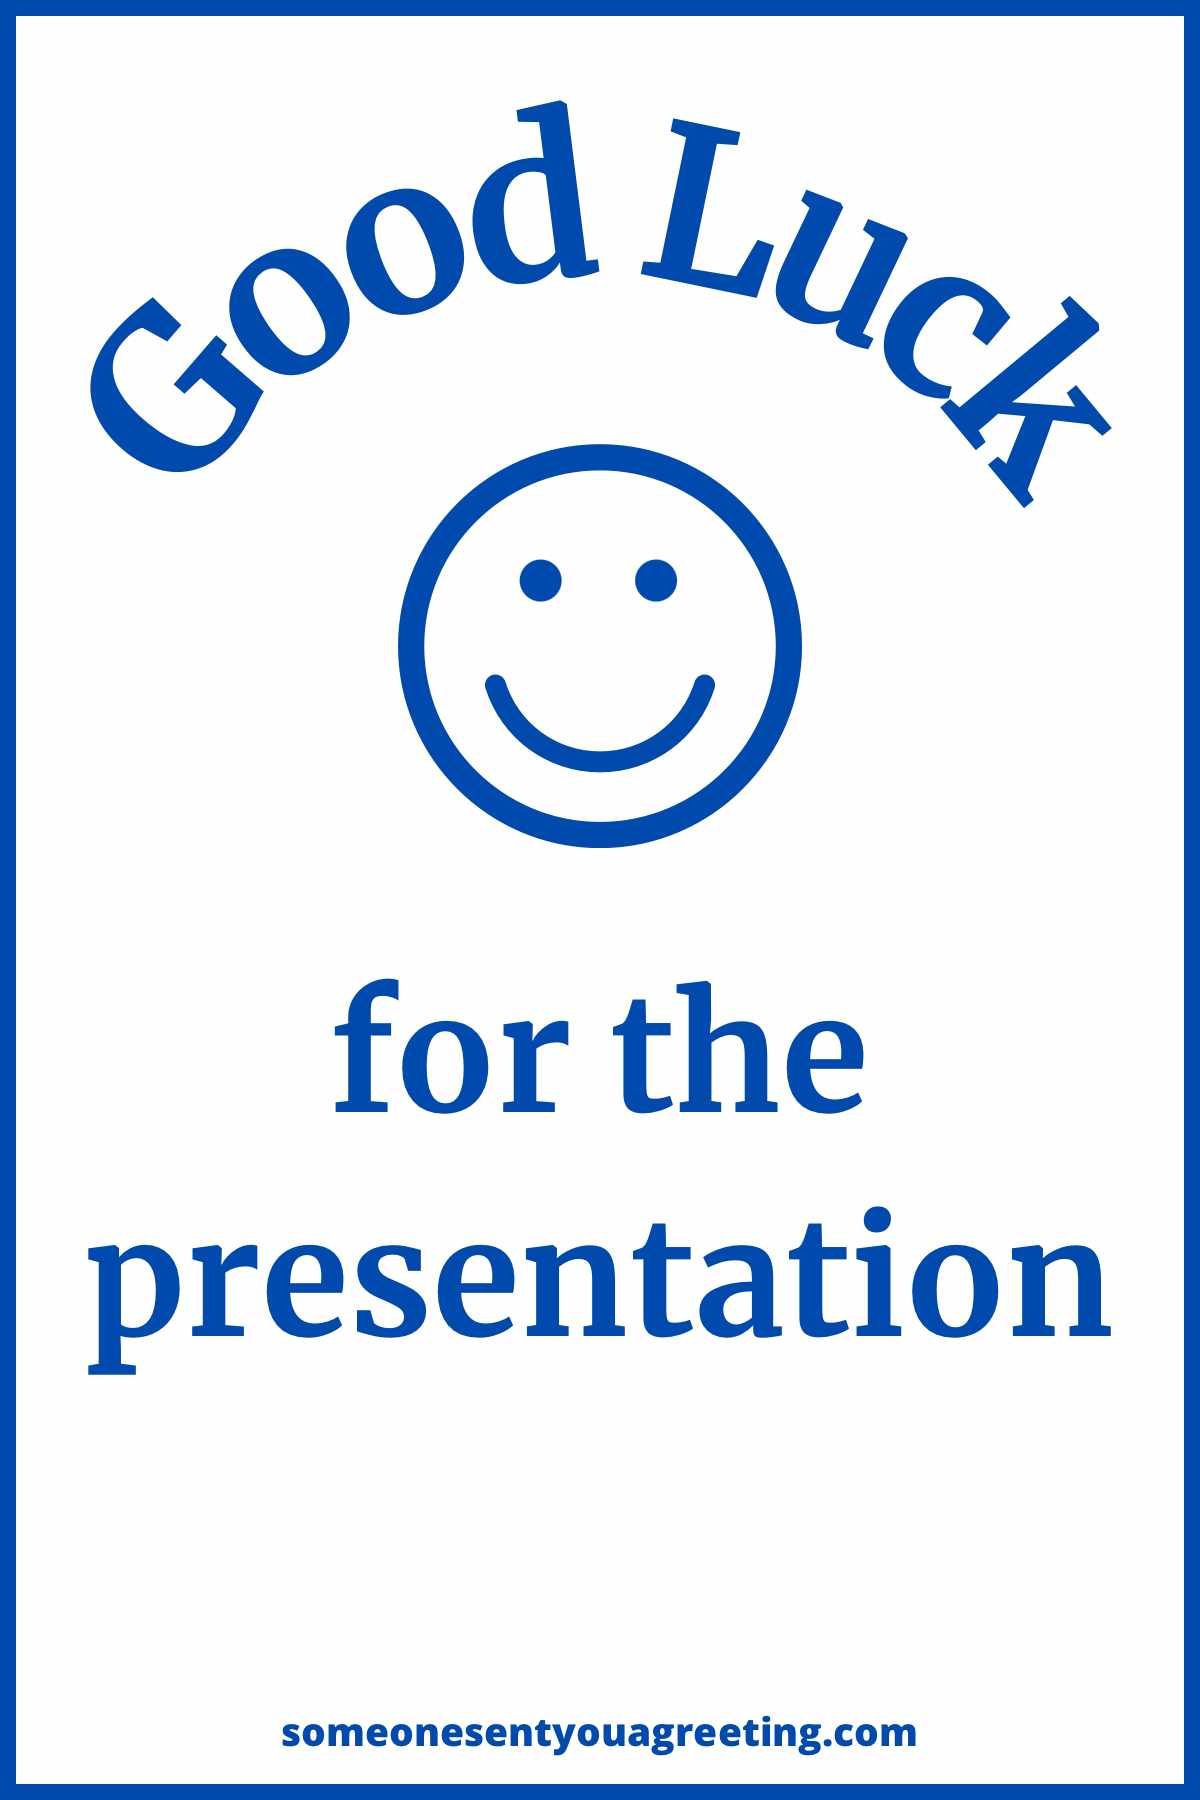 presentation good luck message